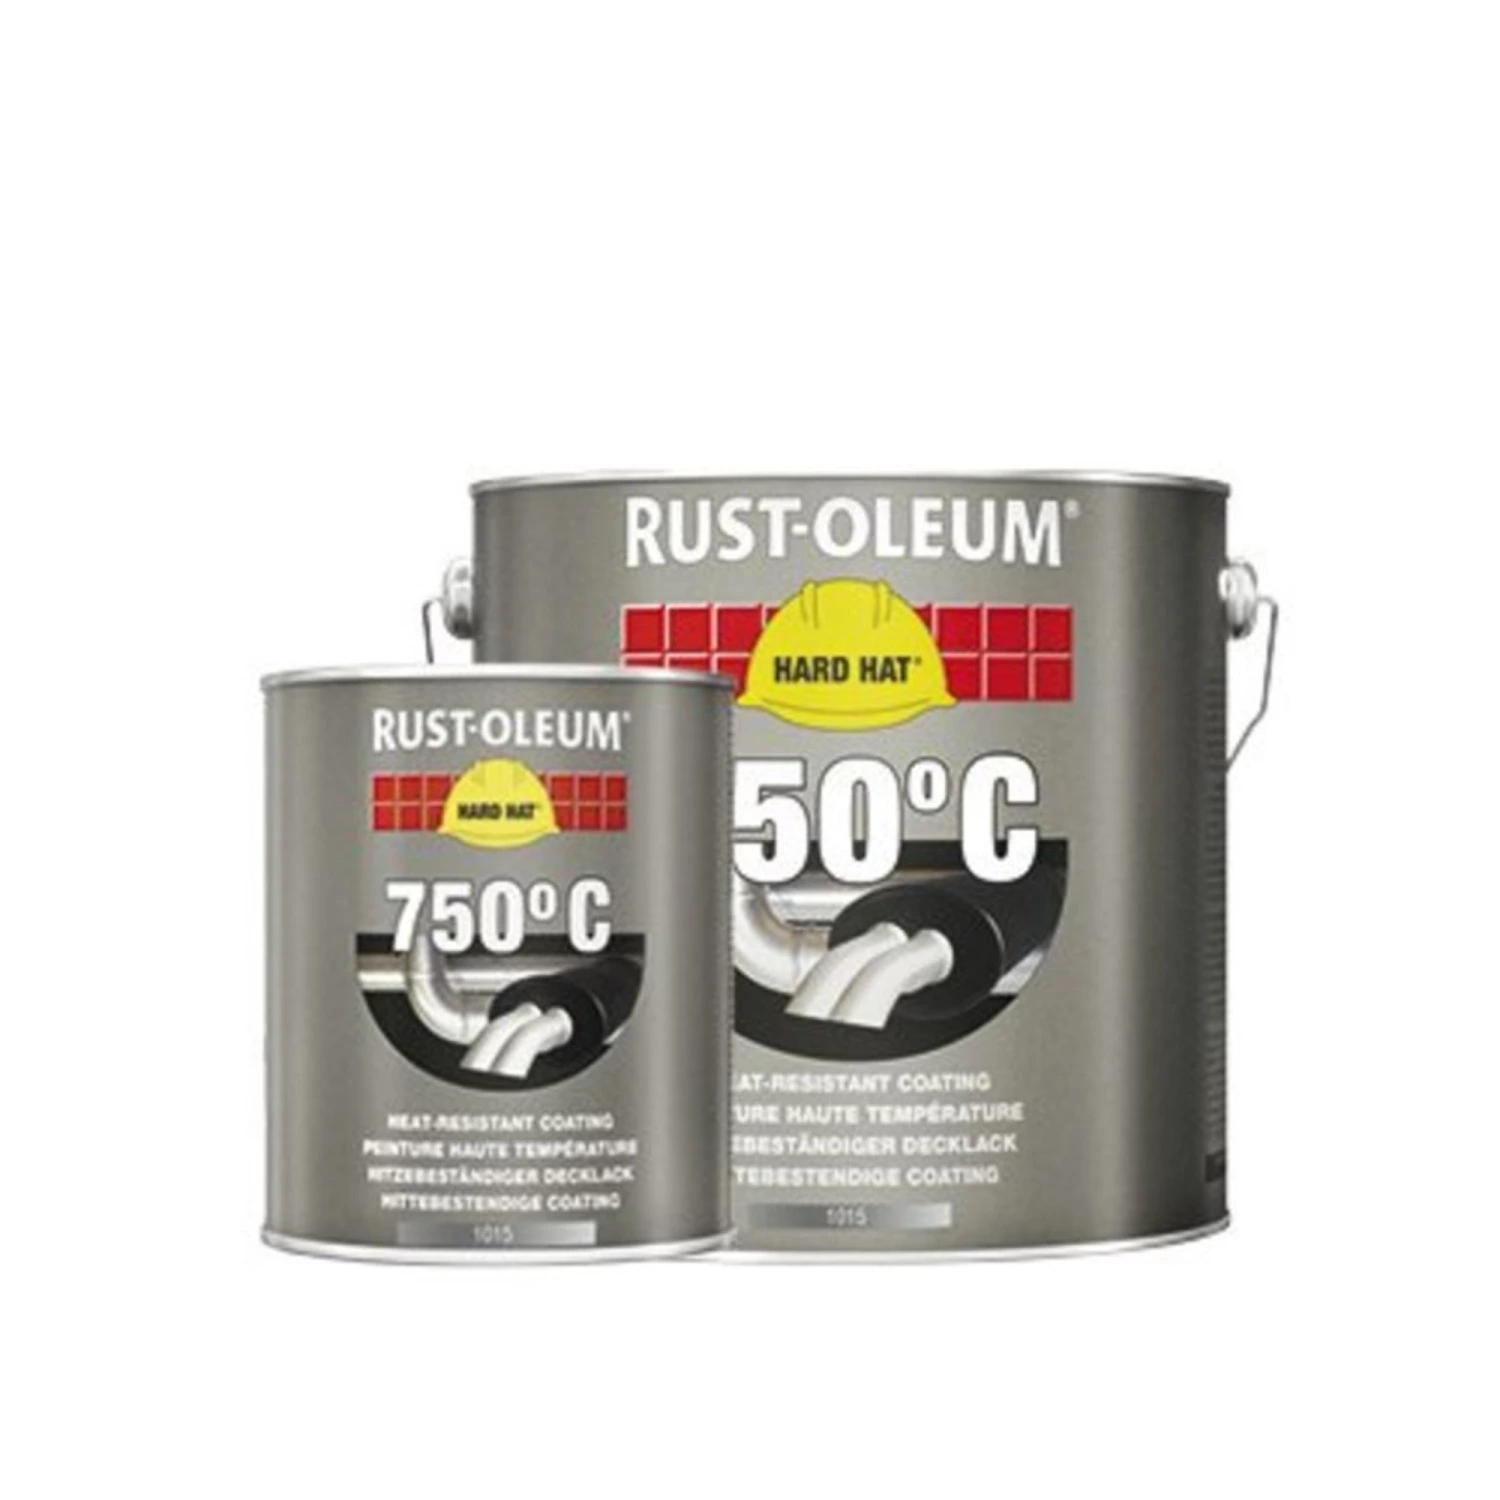 Rust-Oleum Hard Hat Hittebestendige Lak - zwart - 2,5L